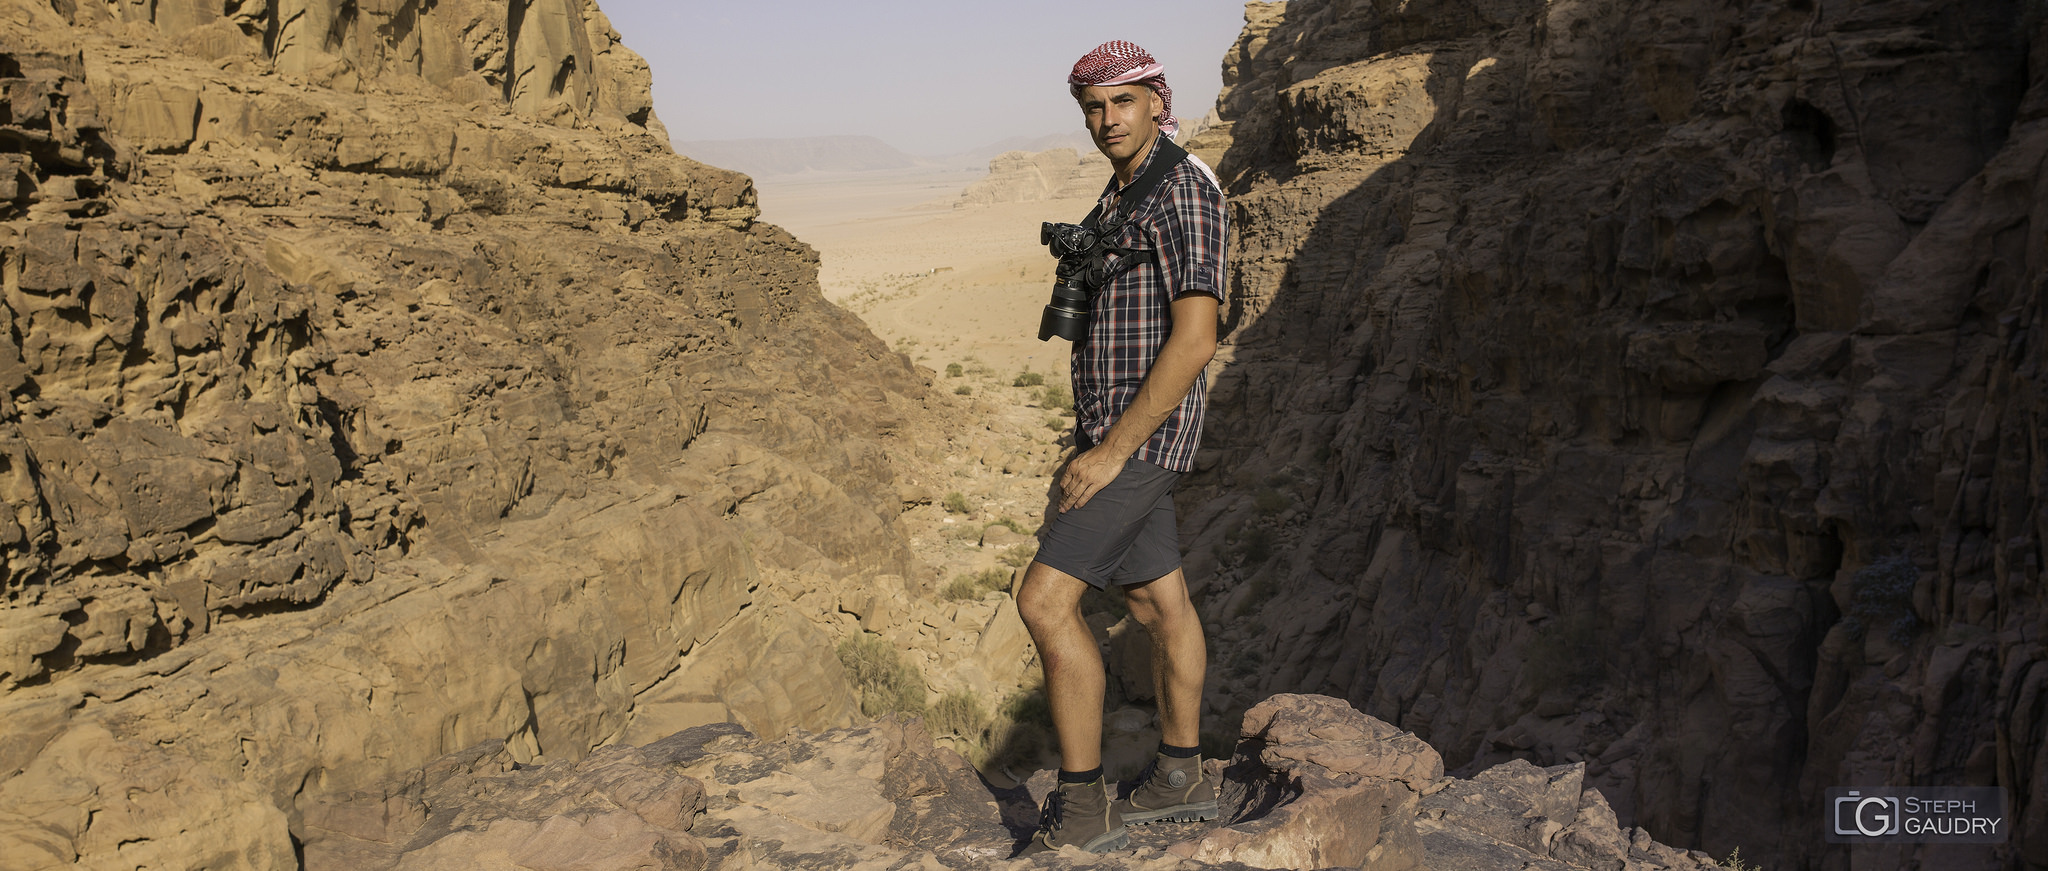 Rando dans les montagnes du Wadi-Rum [Klik om de diavoorstelling te starten]